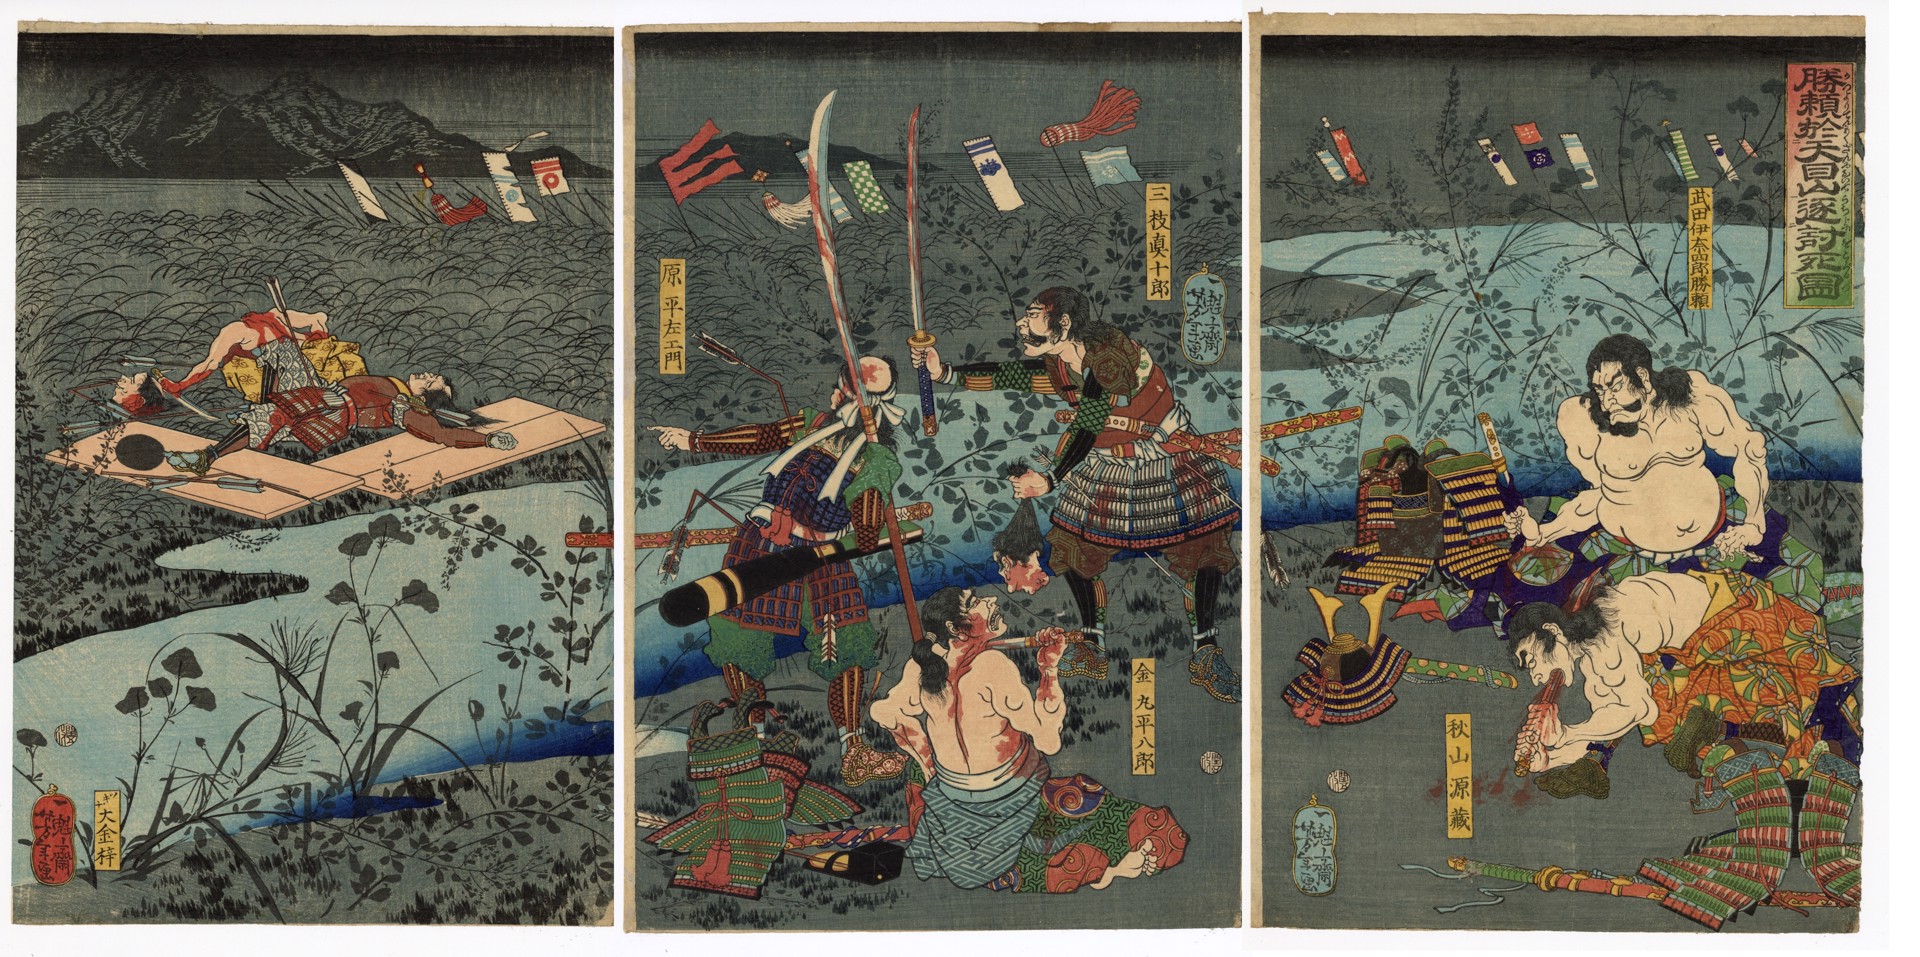 Katsuyori Meets his Death in Battle on Mt. Temmoku by Yoshitoshi